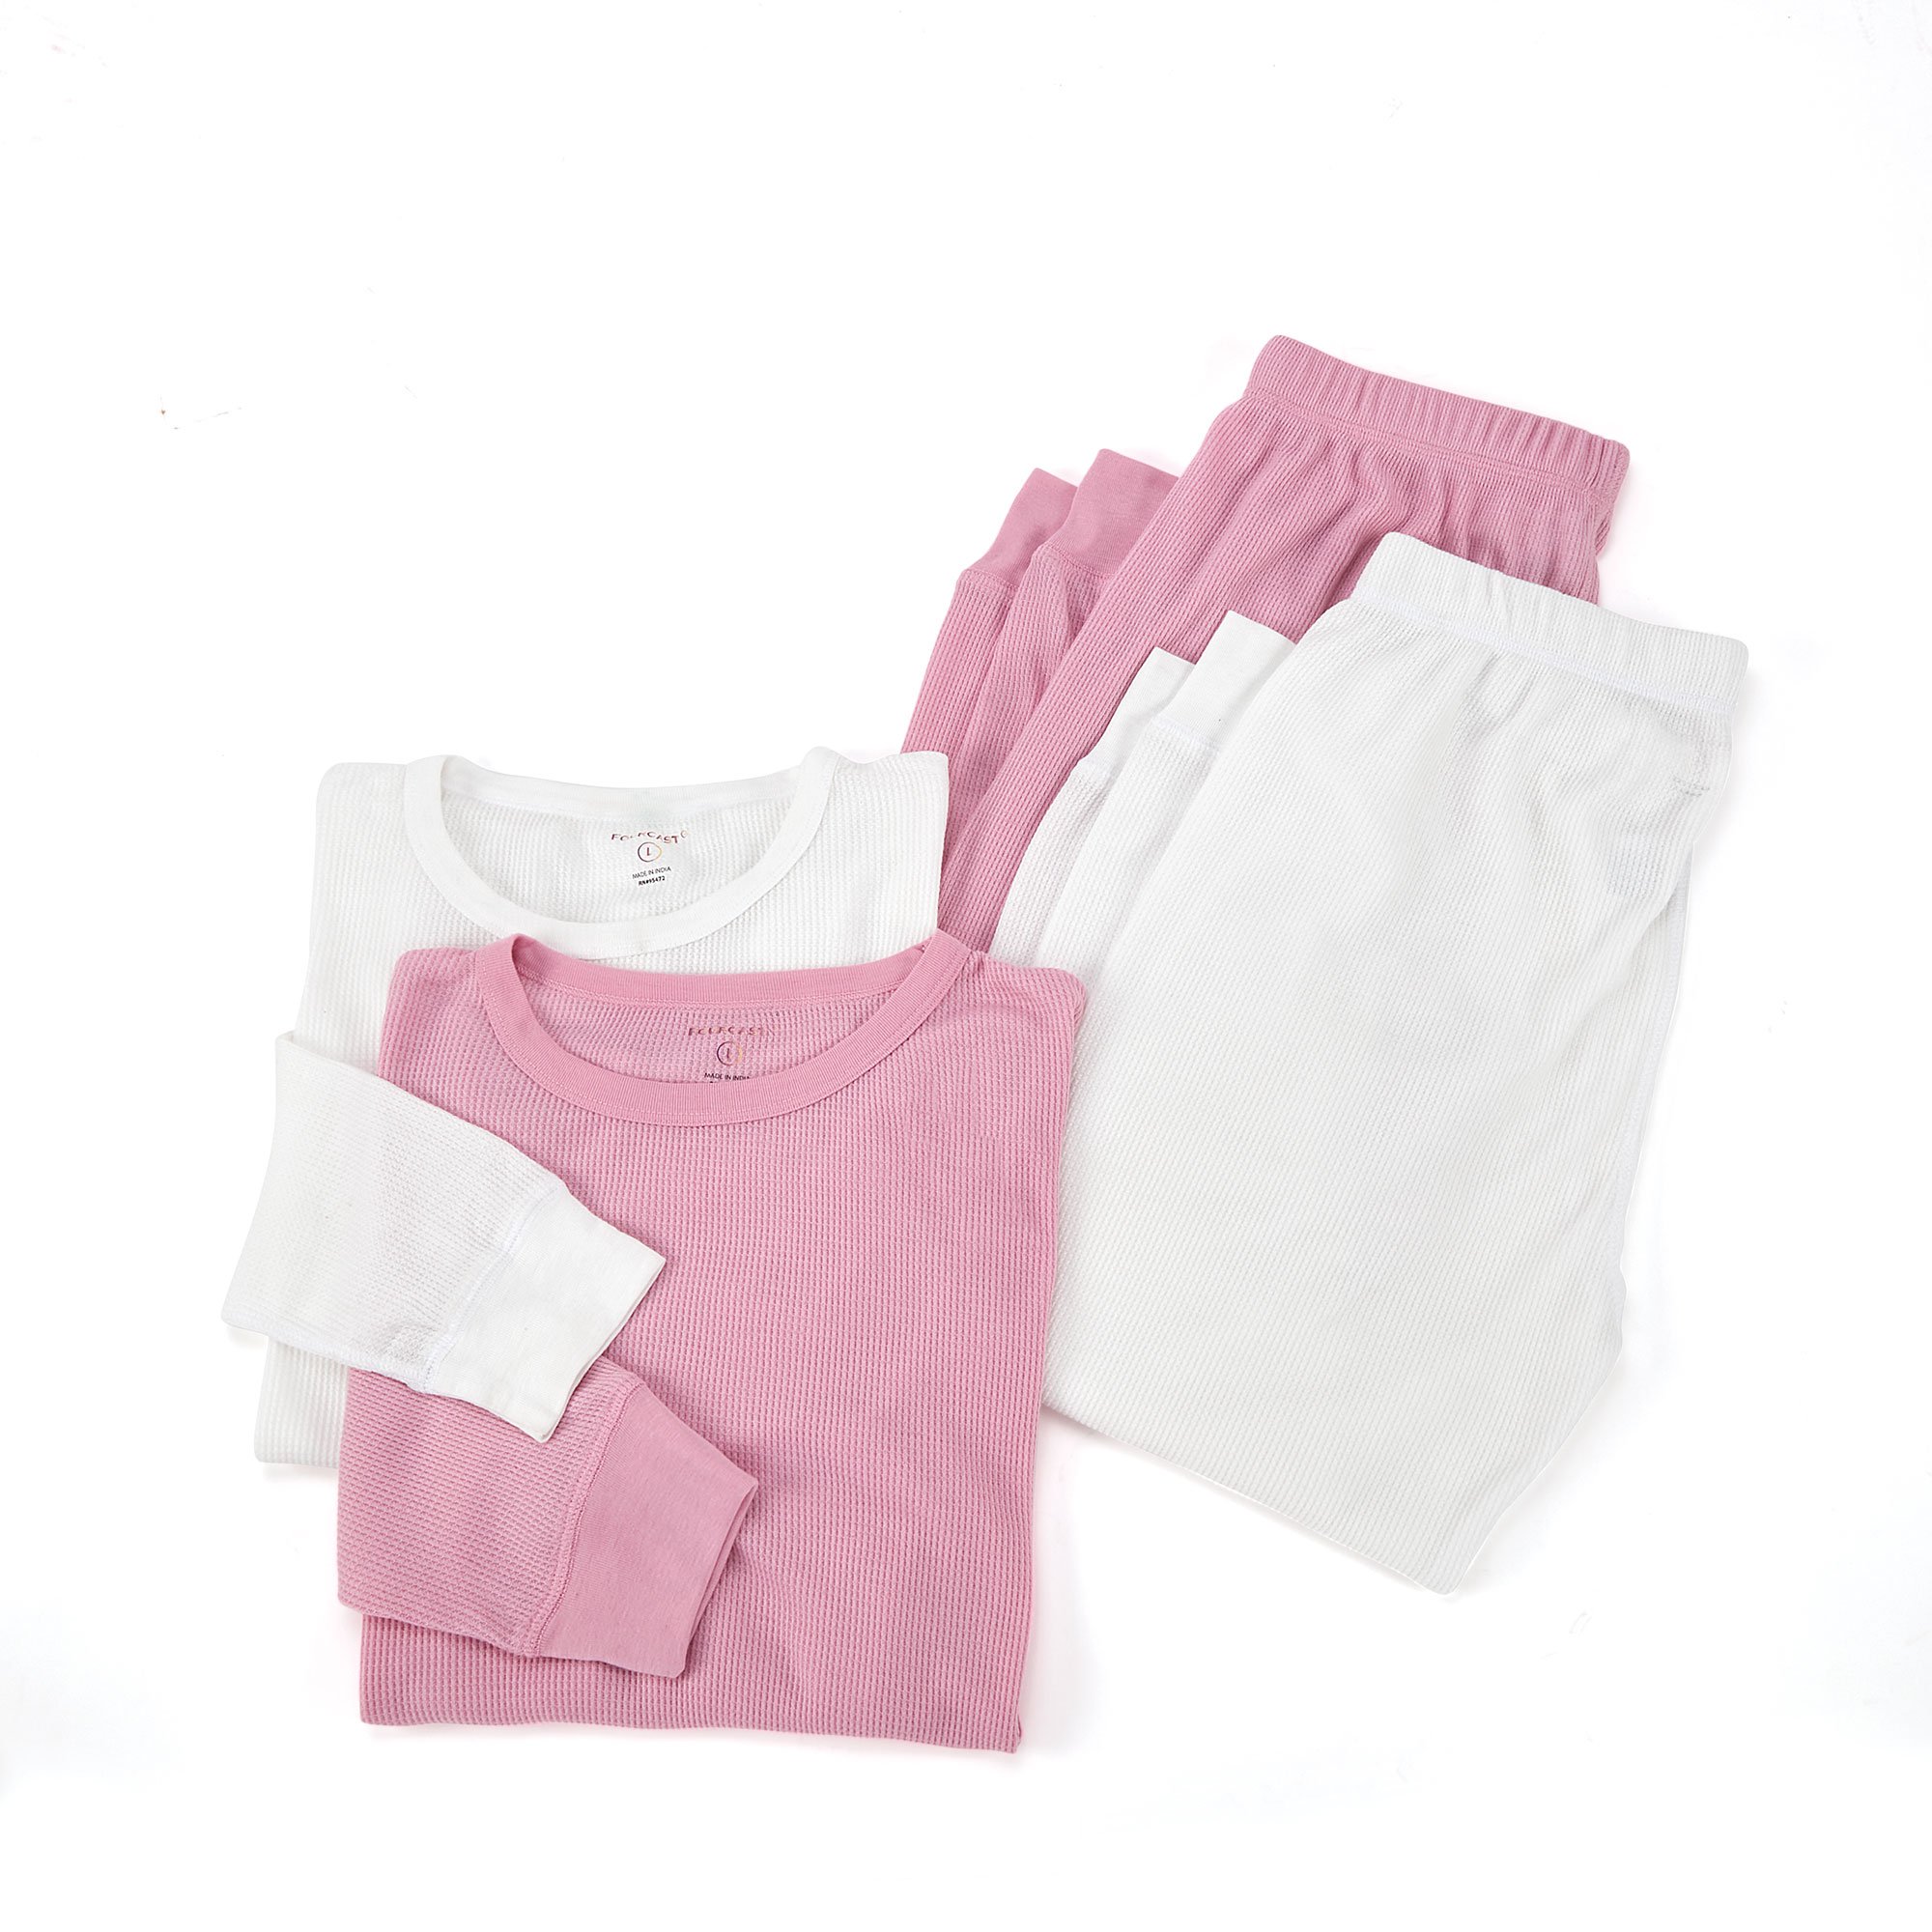 Ladies Pink & White Thermal Set - 2 Pack